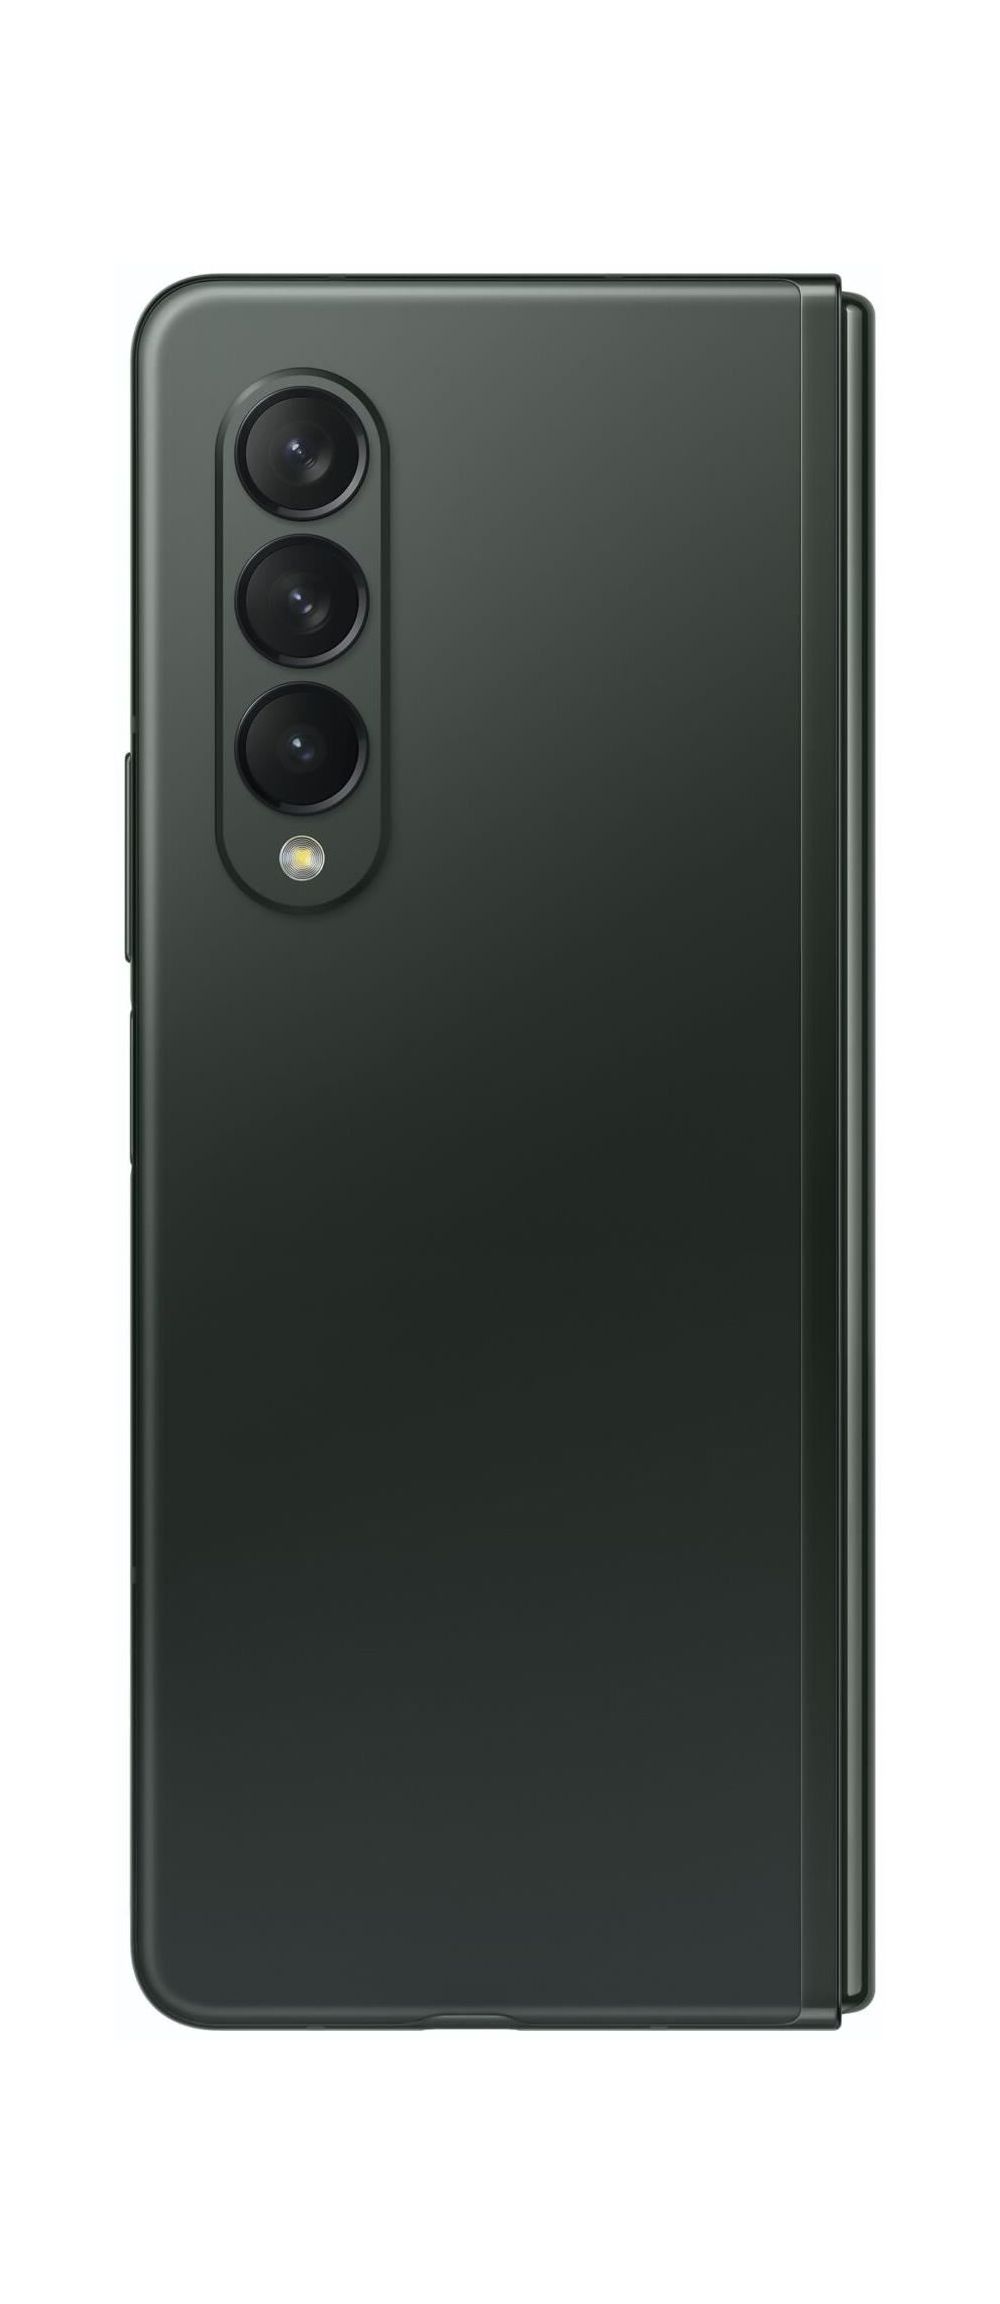 Samsung Galaxy Z Fold3 5G - Smartphone - Dual-SIM - 5G NR - 256 GB - 7.6 - 7.6 - 2208 x 1768 Pixel 2208 x 1768 Pixel (374 ppi (Pixel pro )) - Flex Dynamic AMOLED 2X - RAM 12 GB - Triple-Kamera (2x front cameras) - Android - Phantom Green